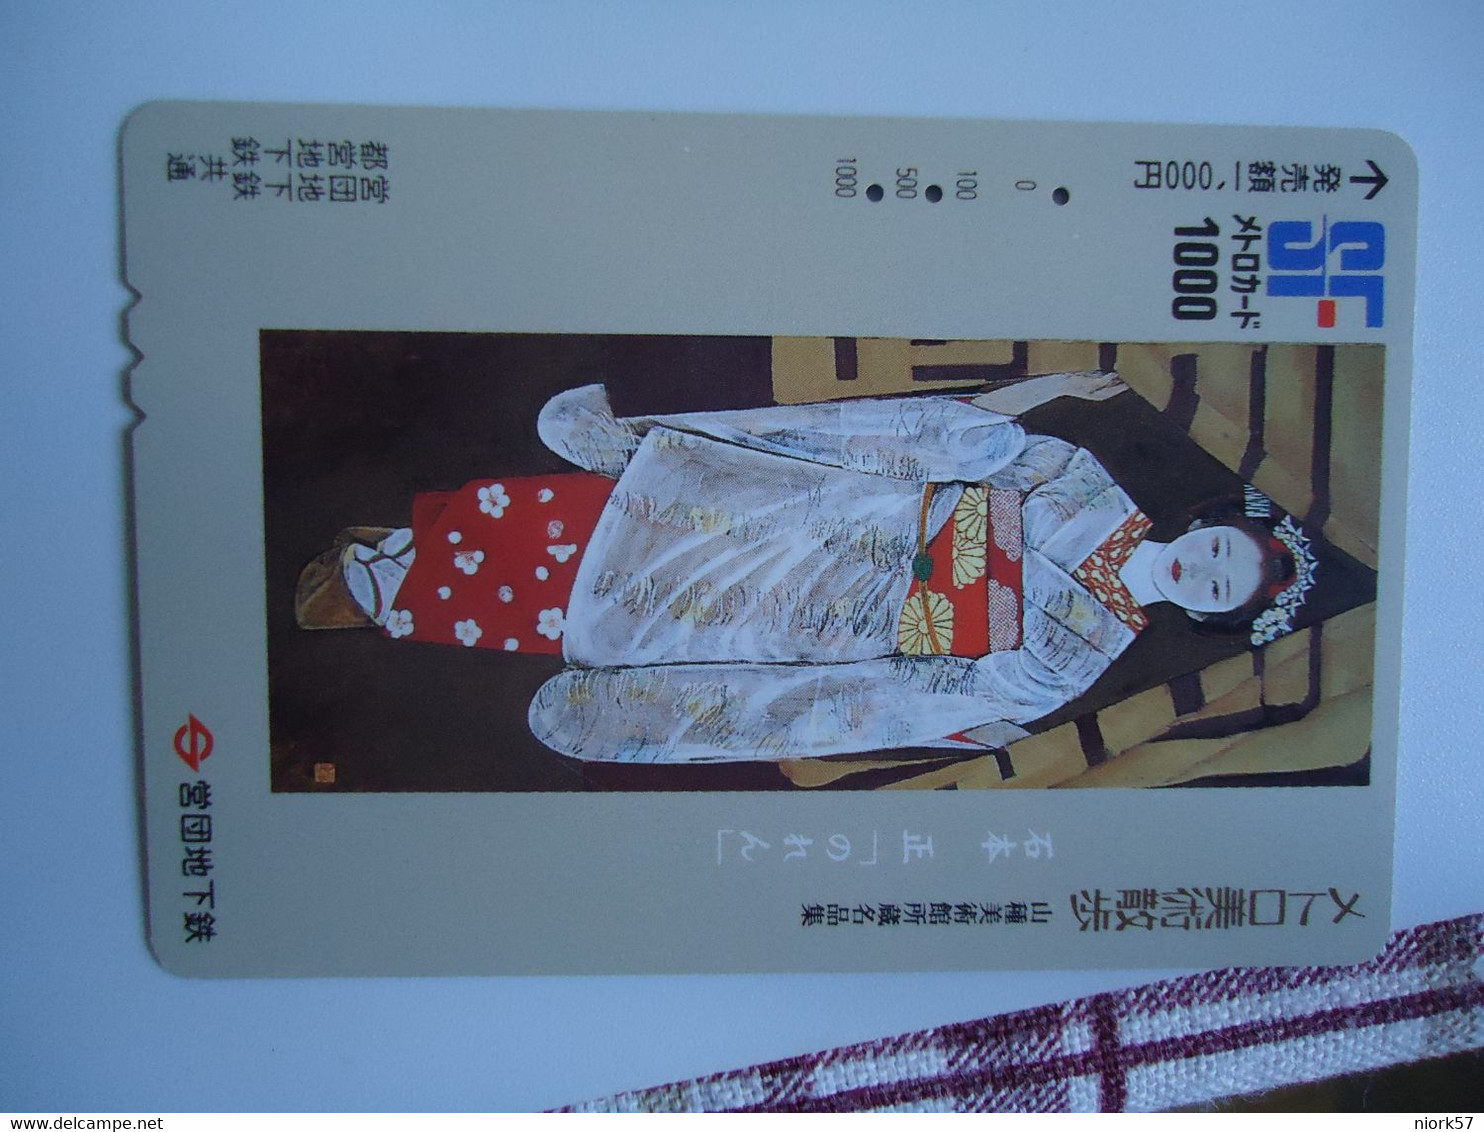 JAPAN  OTHERS CARDS  PAINTING PAINTINGS  WOMENS - Peinture